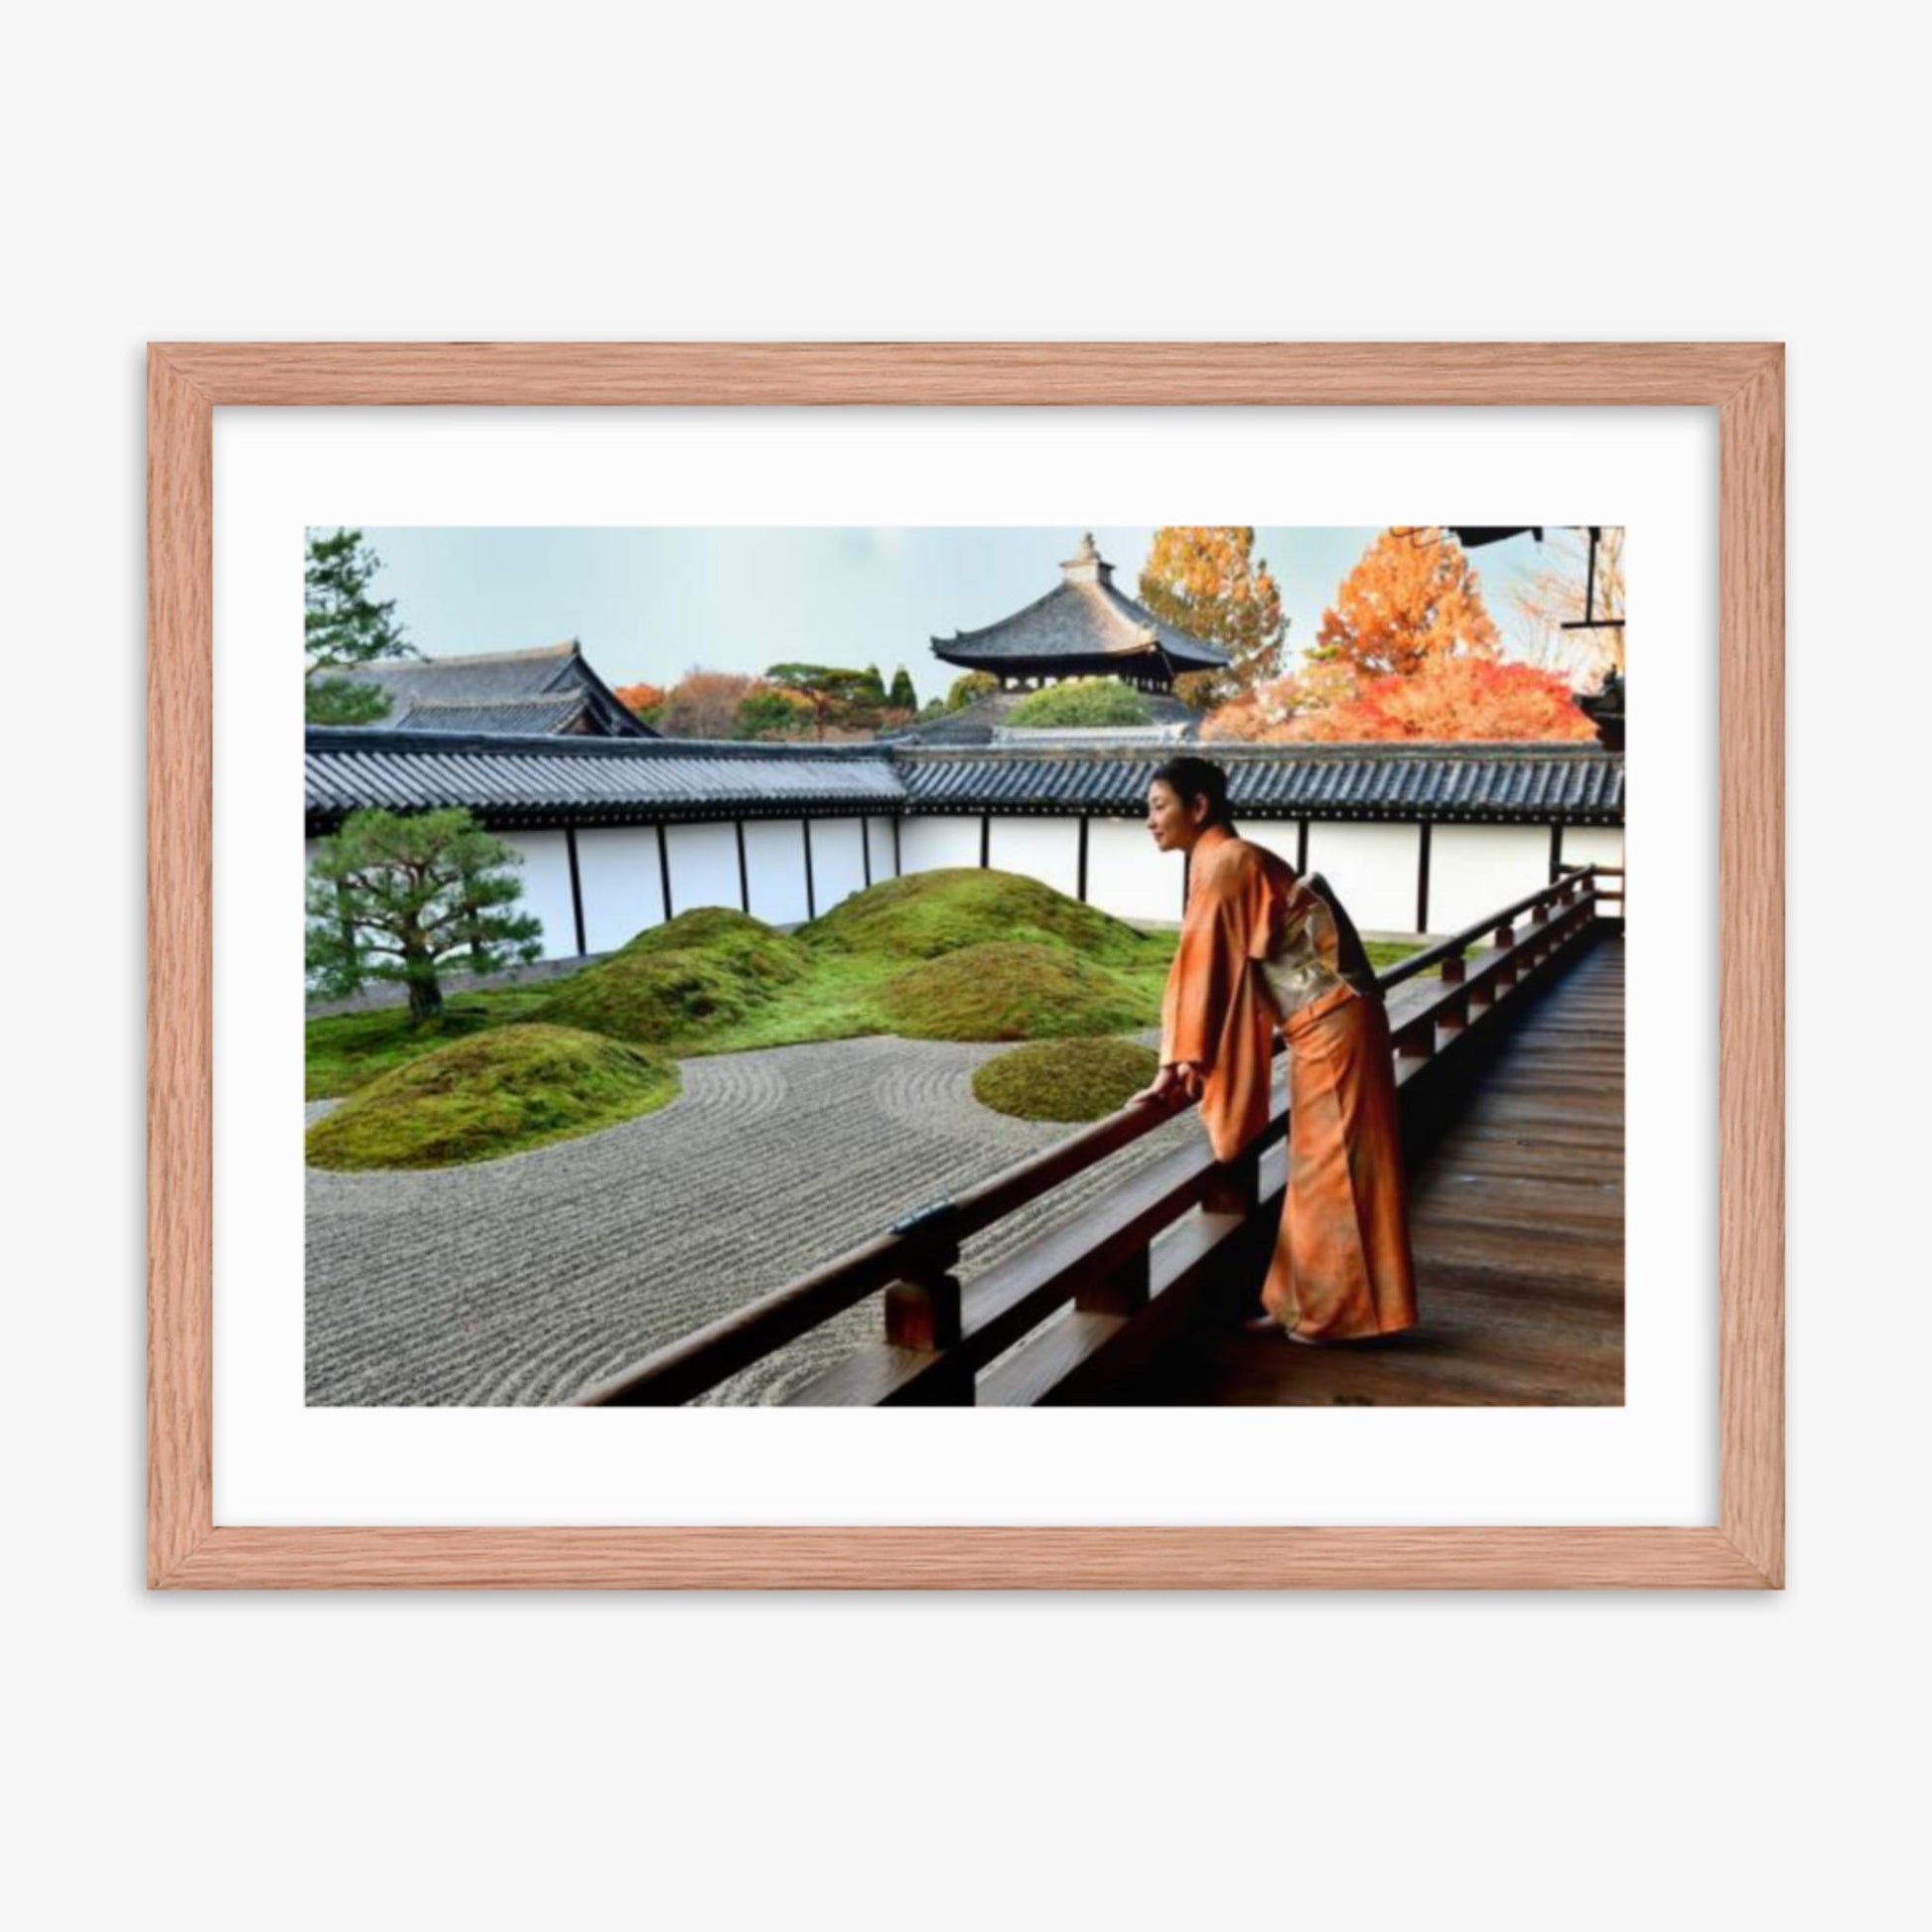 Japanese Woman in Kimono Appreciating Japanese Garden at Tofukuji, Kyoto 18x24 in Poster With Oak Frame